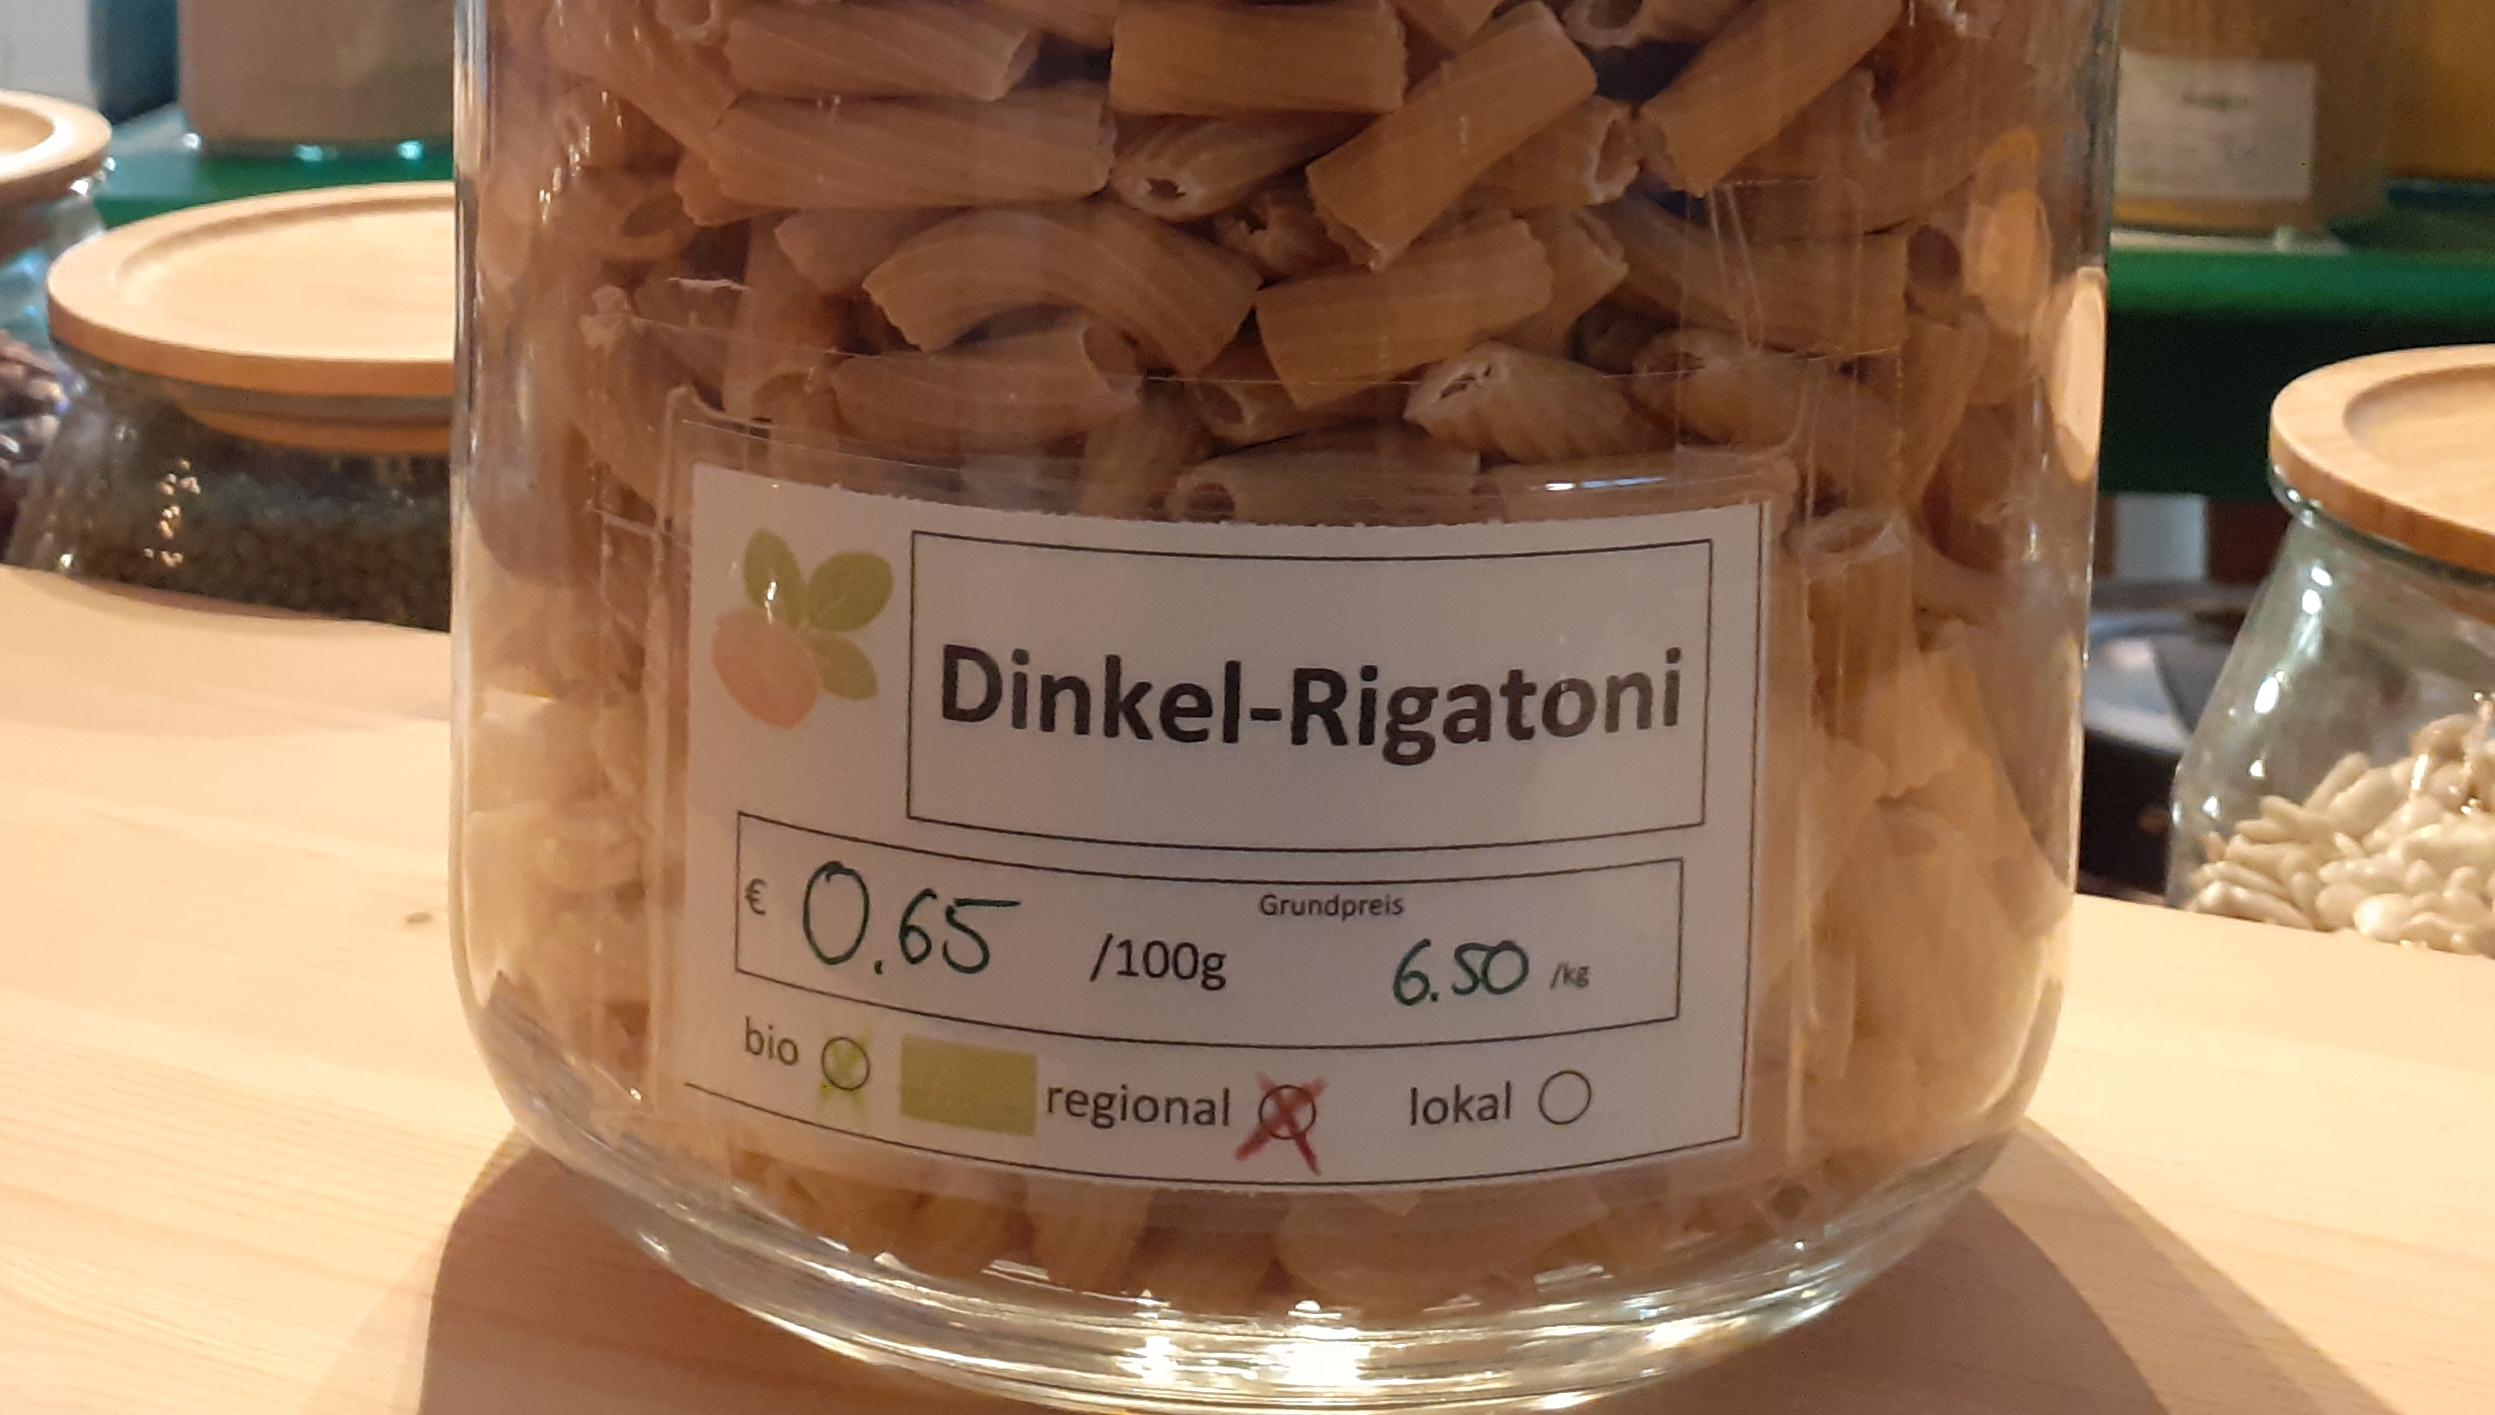 Dinkel-Rigatoni